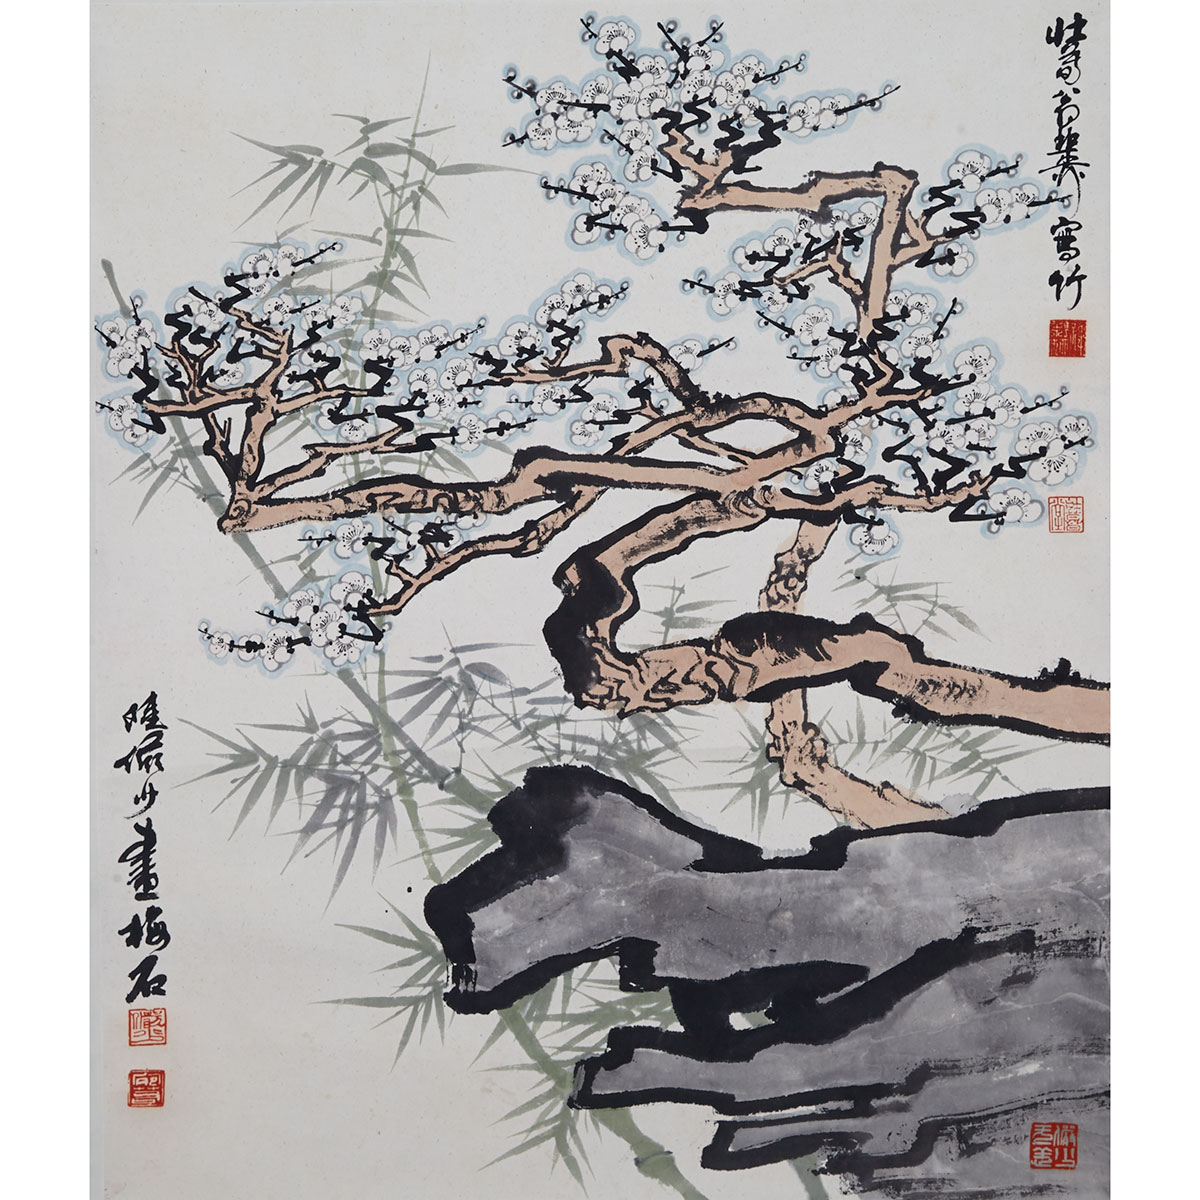 Attributed to Lu Yanshao (1909-1993) and Xie Zhiliu (1910-1997)